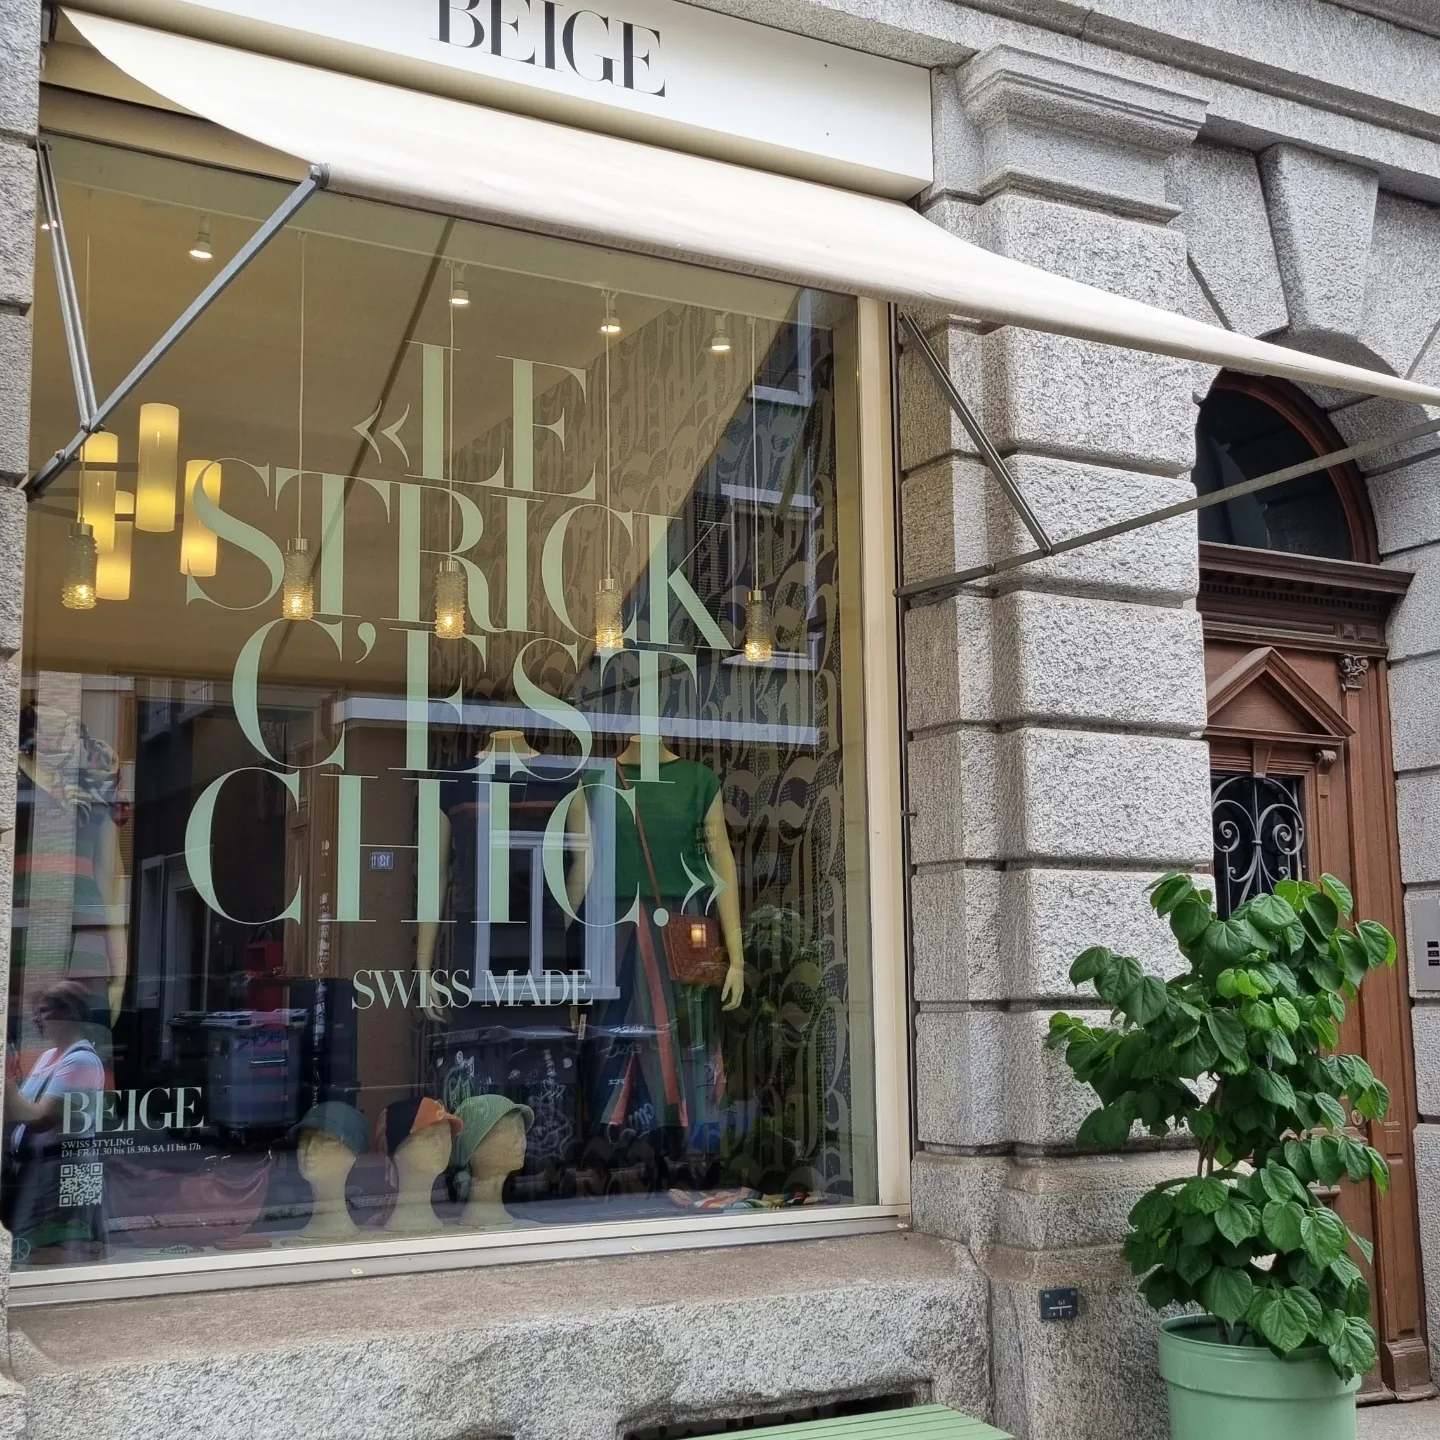 Le strick c'est chic, negozio Zurigo